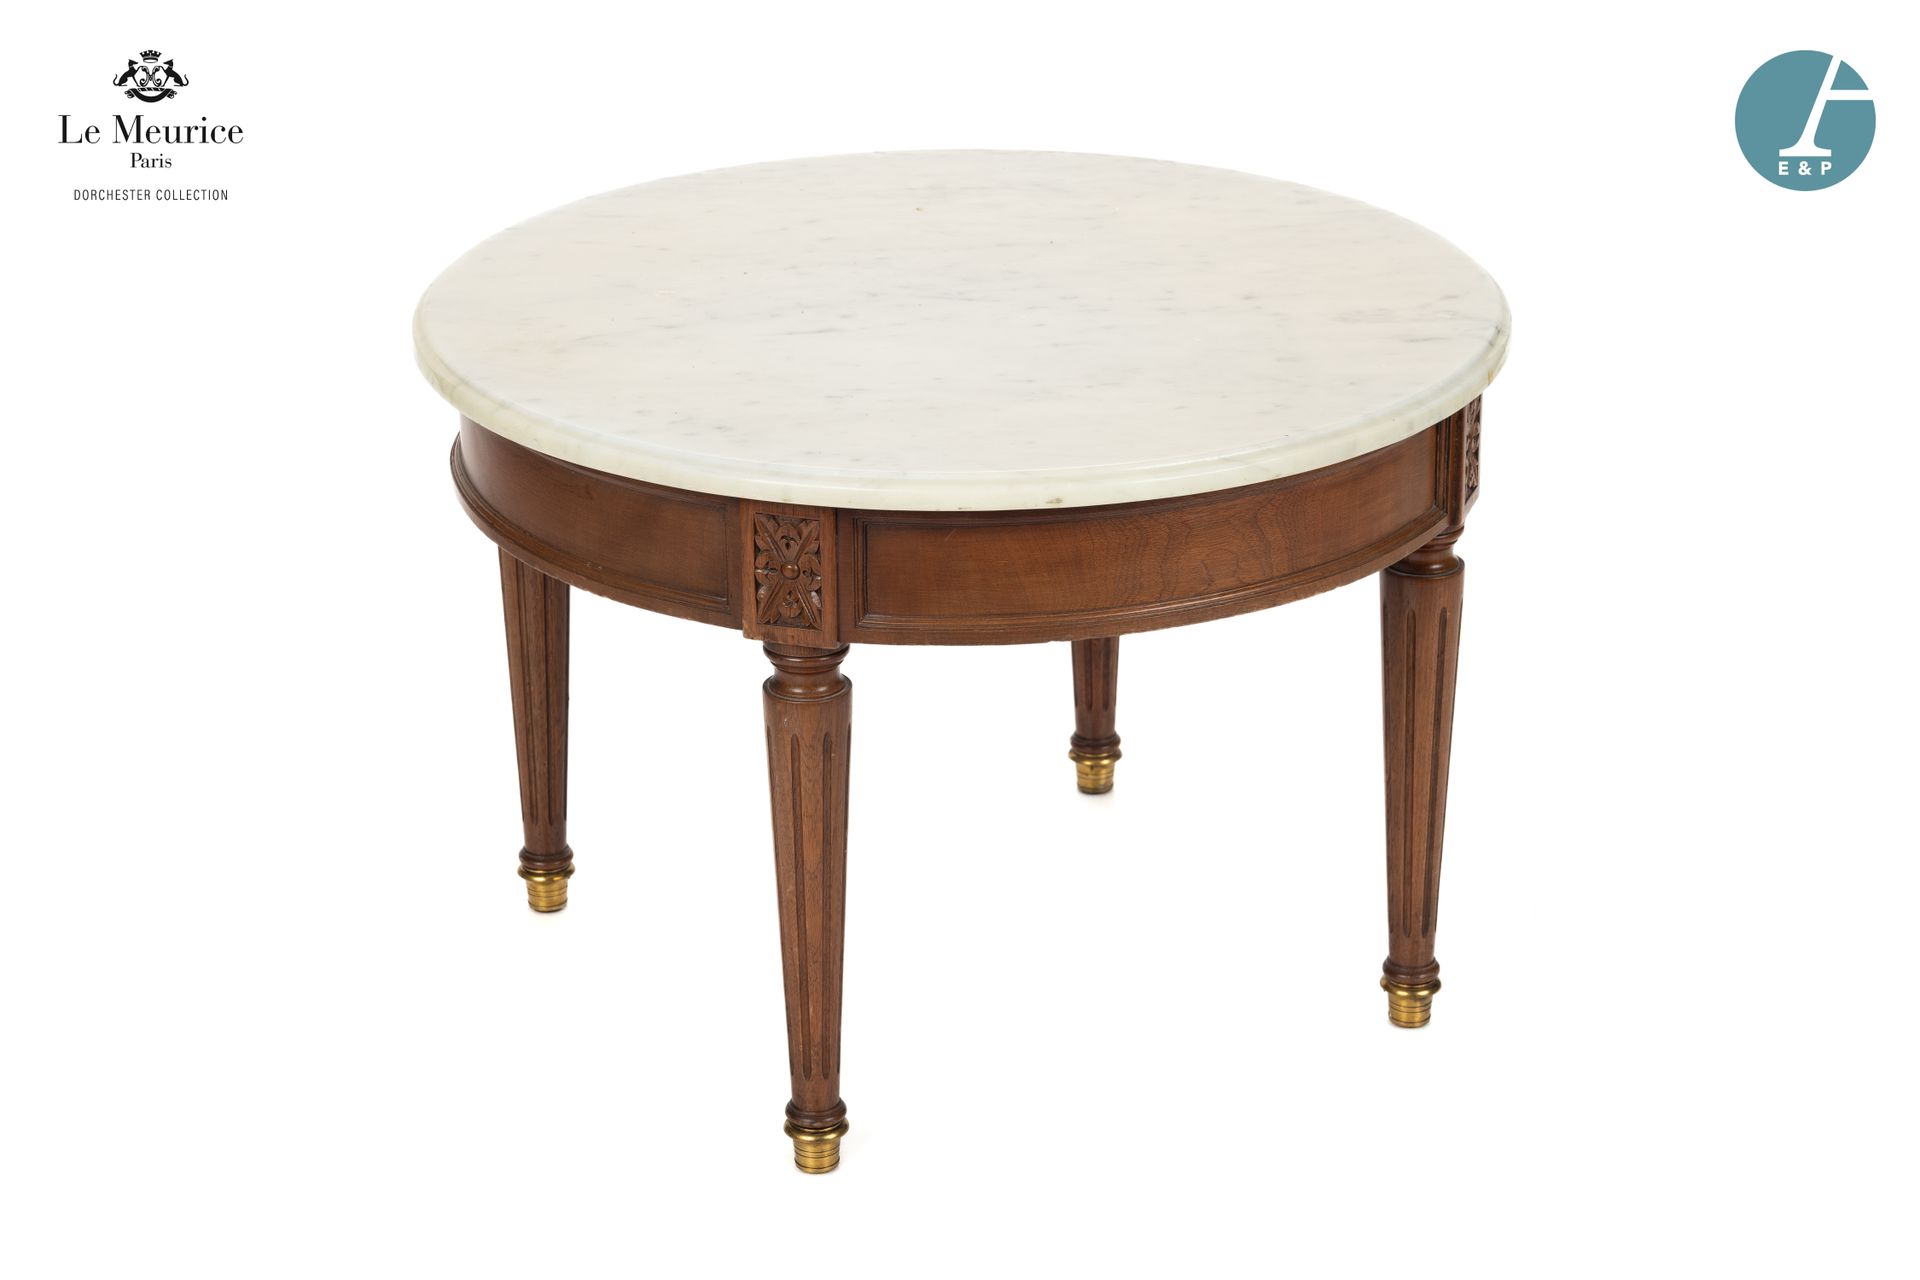 Null From Hôtel Le Meurice.
Circular coffee table in mahogany and mahogany venee&hellip;